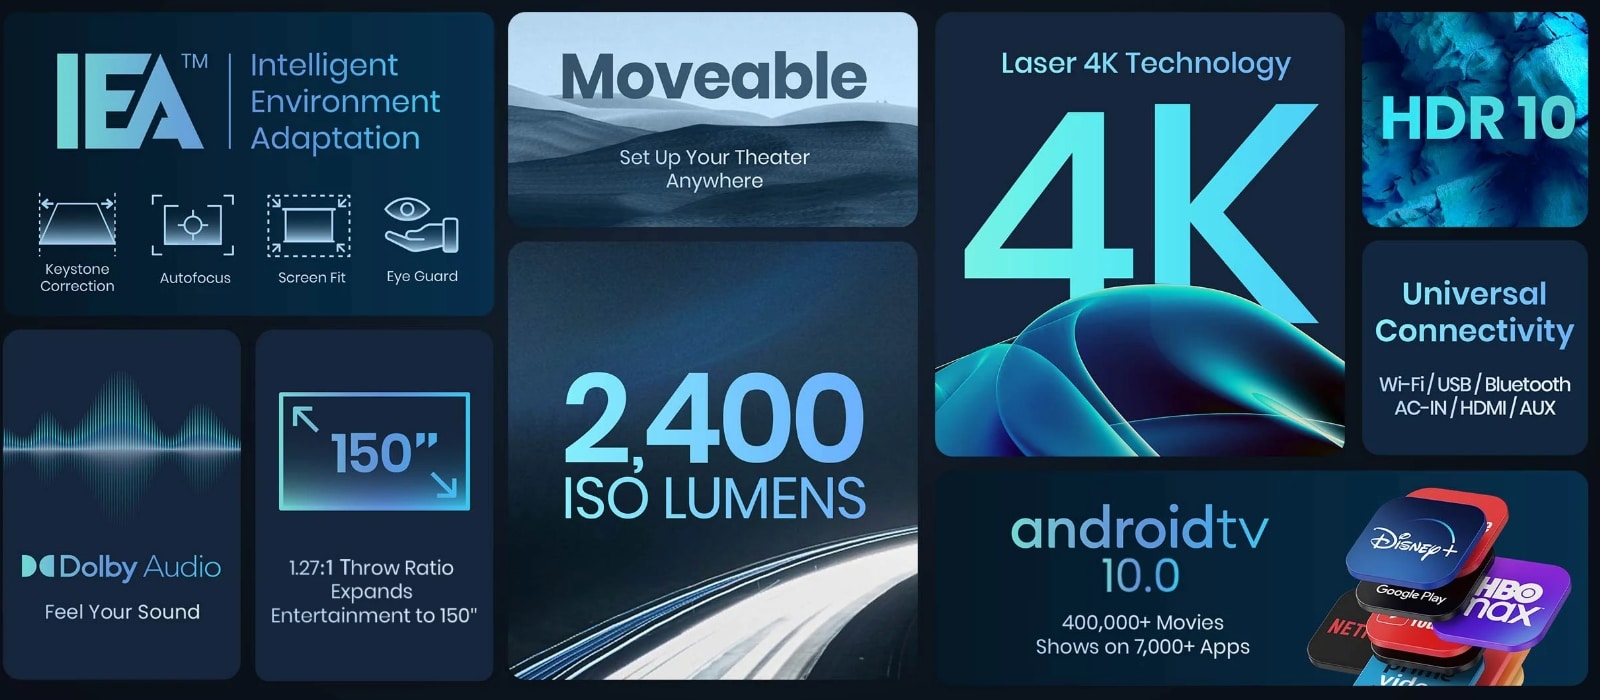 Smarter Beamer mit Android: Nebula Cosmos Laser Full HD und 4K